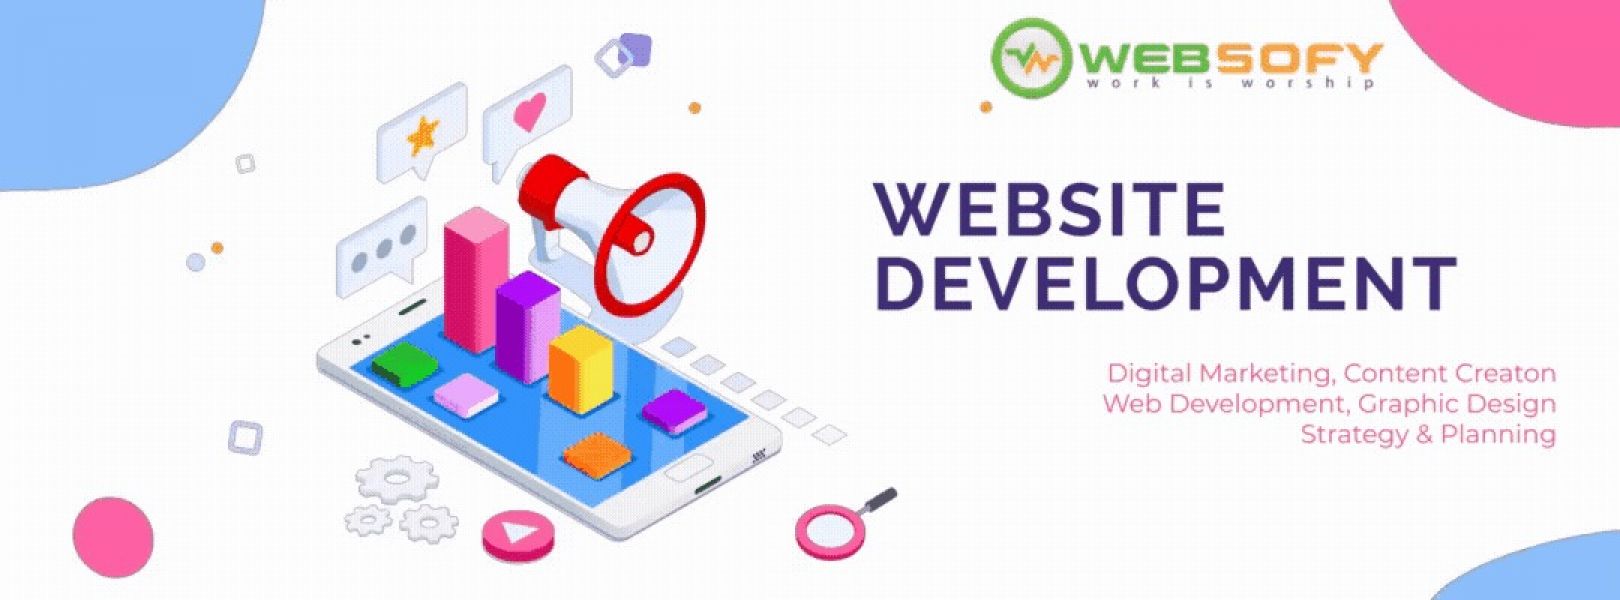 Website Design in Lucknow: Websofy